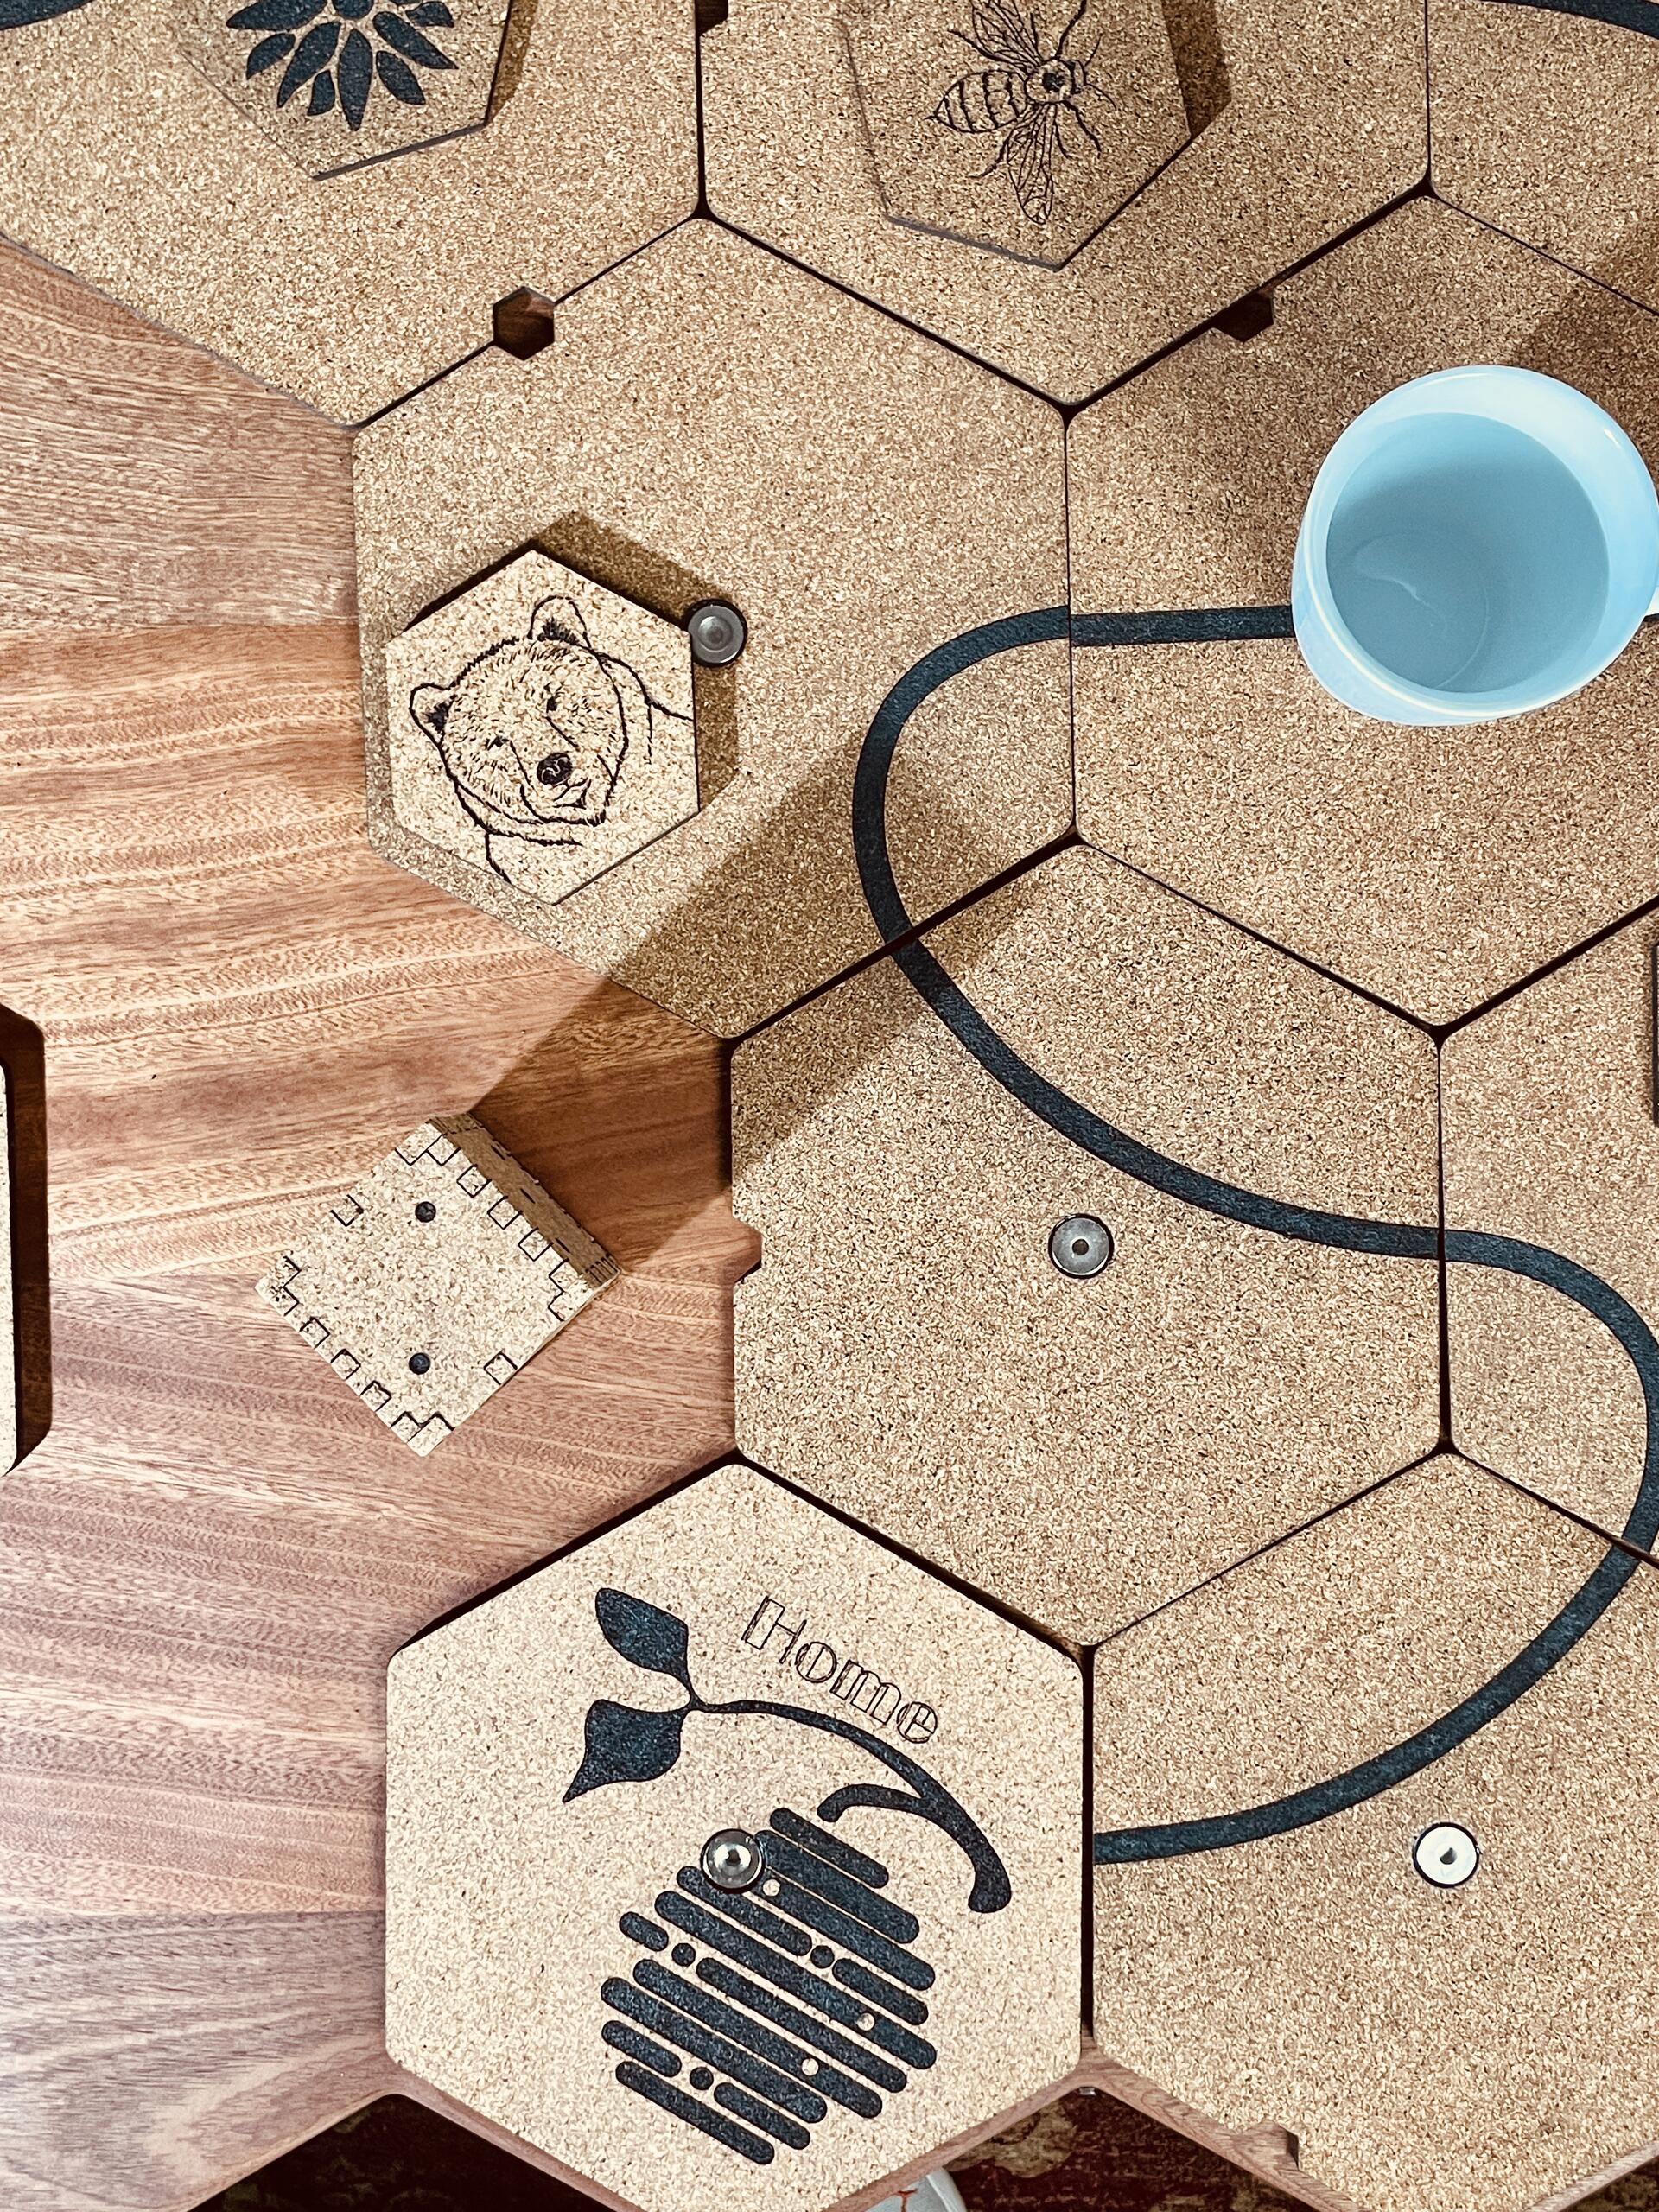 hexagon cork tiles used for game play, hexagonal cork coasters, bear coaster, bee coaster. White cup. Cork Home Tile, Sapele Wood, cork game die